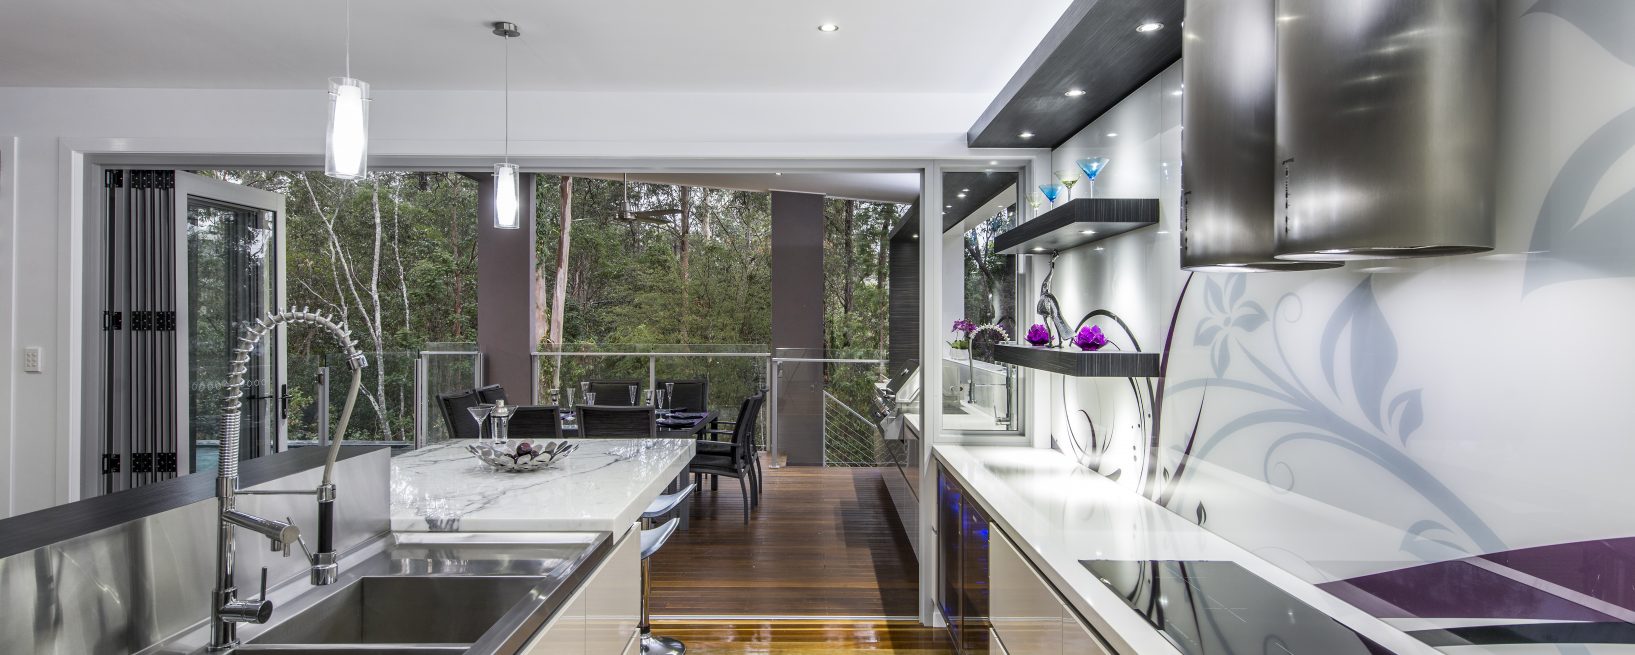 Brisbane Kitchen Renovation | Kitchen Design by Sublime Archtectural